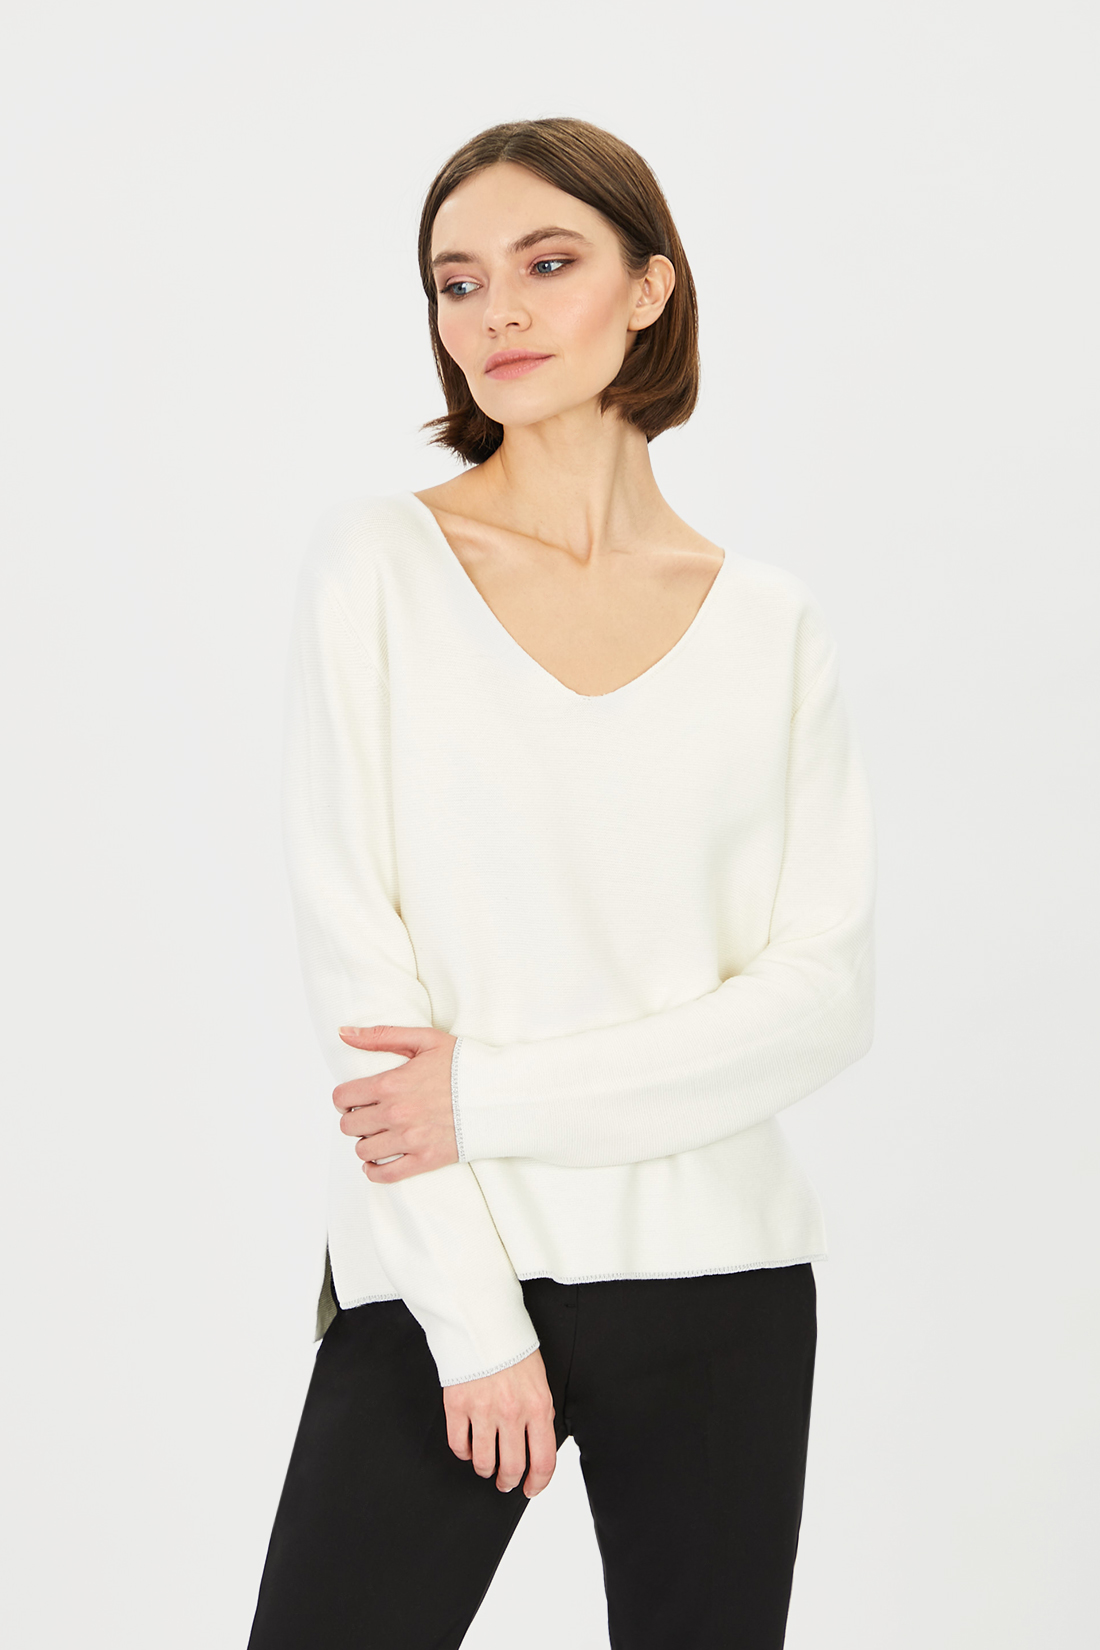 Пуловер с мерцающей отделкой (арт. baon B131028), размер XL, цвет белый Пуловер с мерцающей отделкой (арт. baon B131028) - фото 1